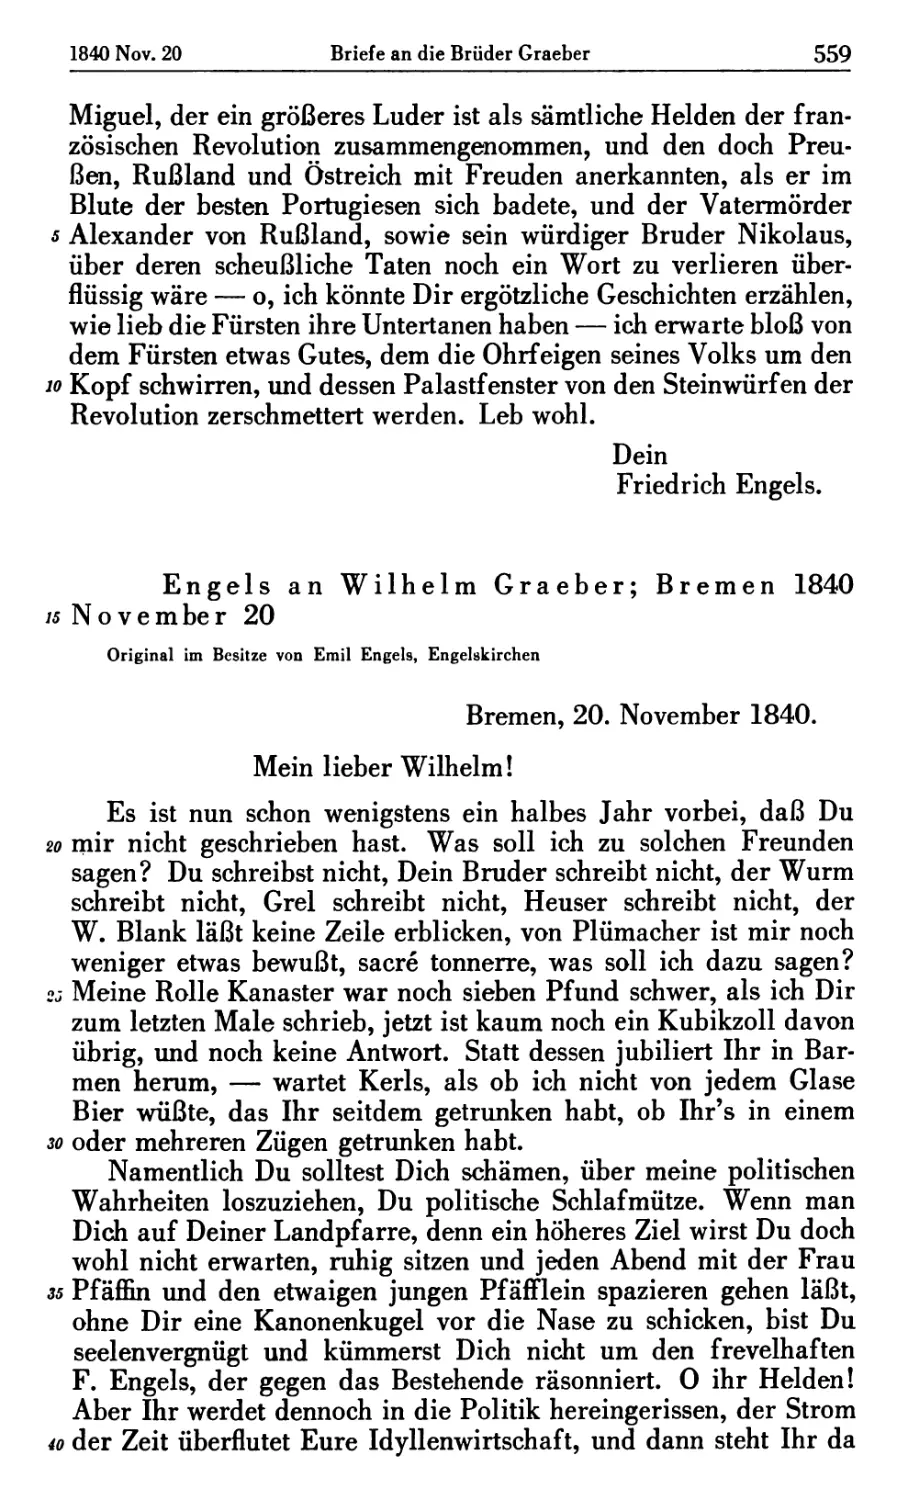 Engels an Wilhelm Graeber; Bremen 1840 November 20